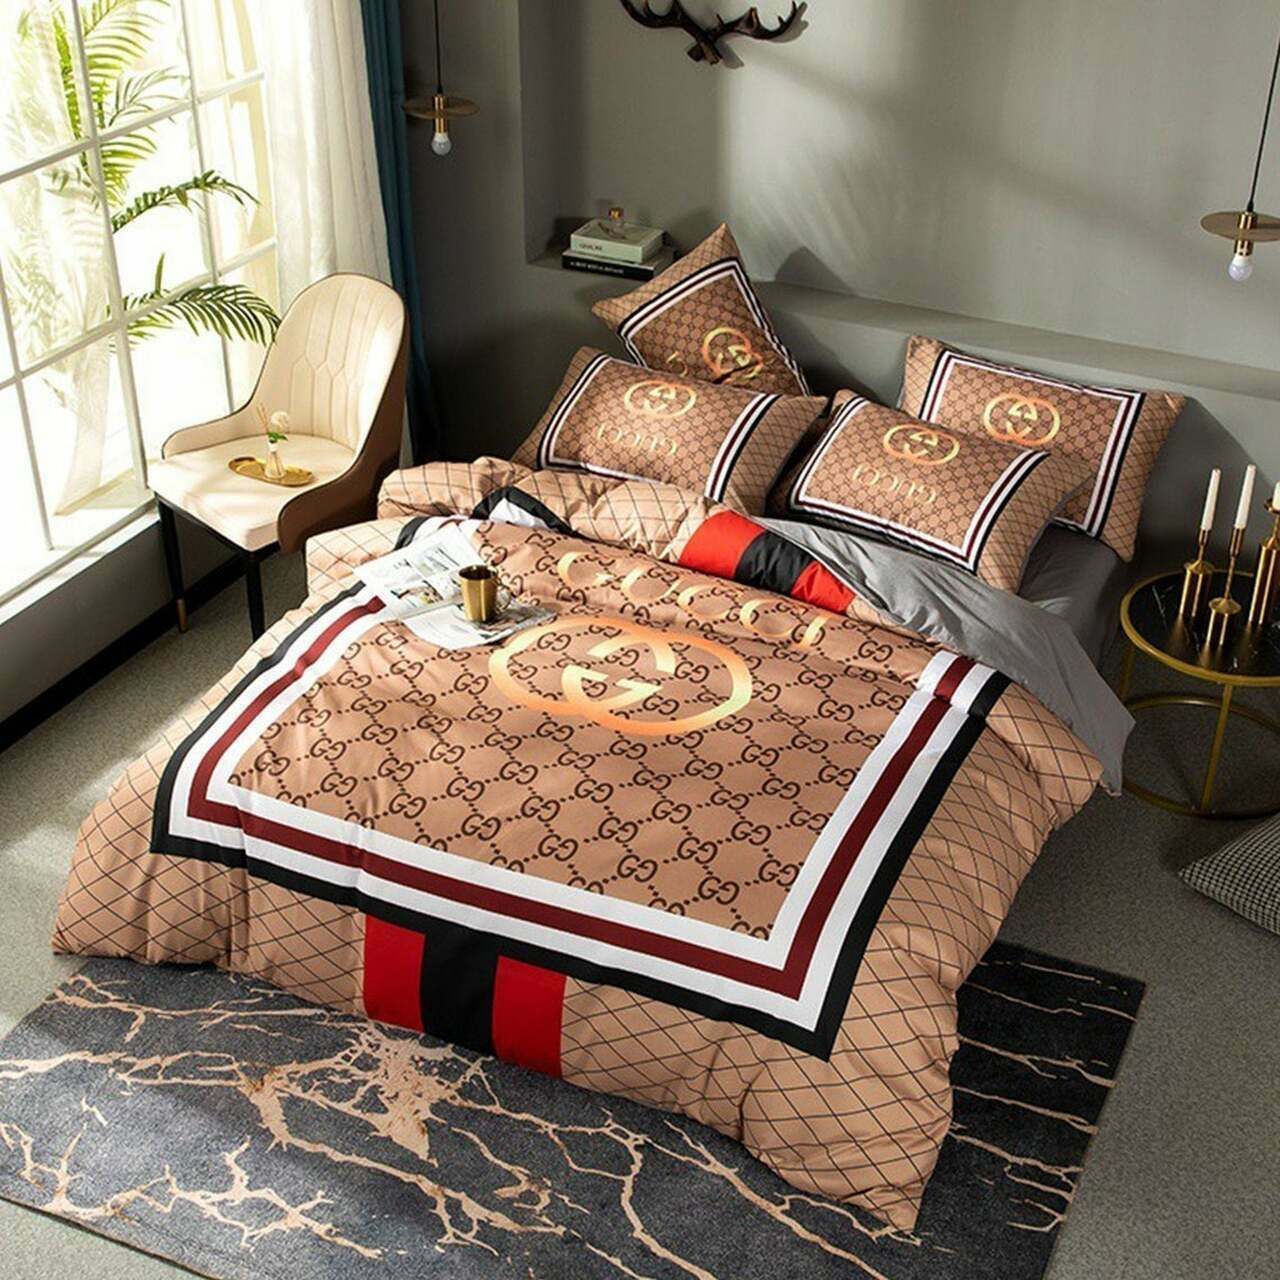 GC Brown Luxury Brand High-End Bedding Set Home Decor HT